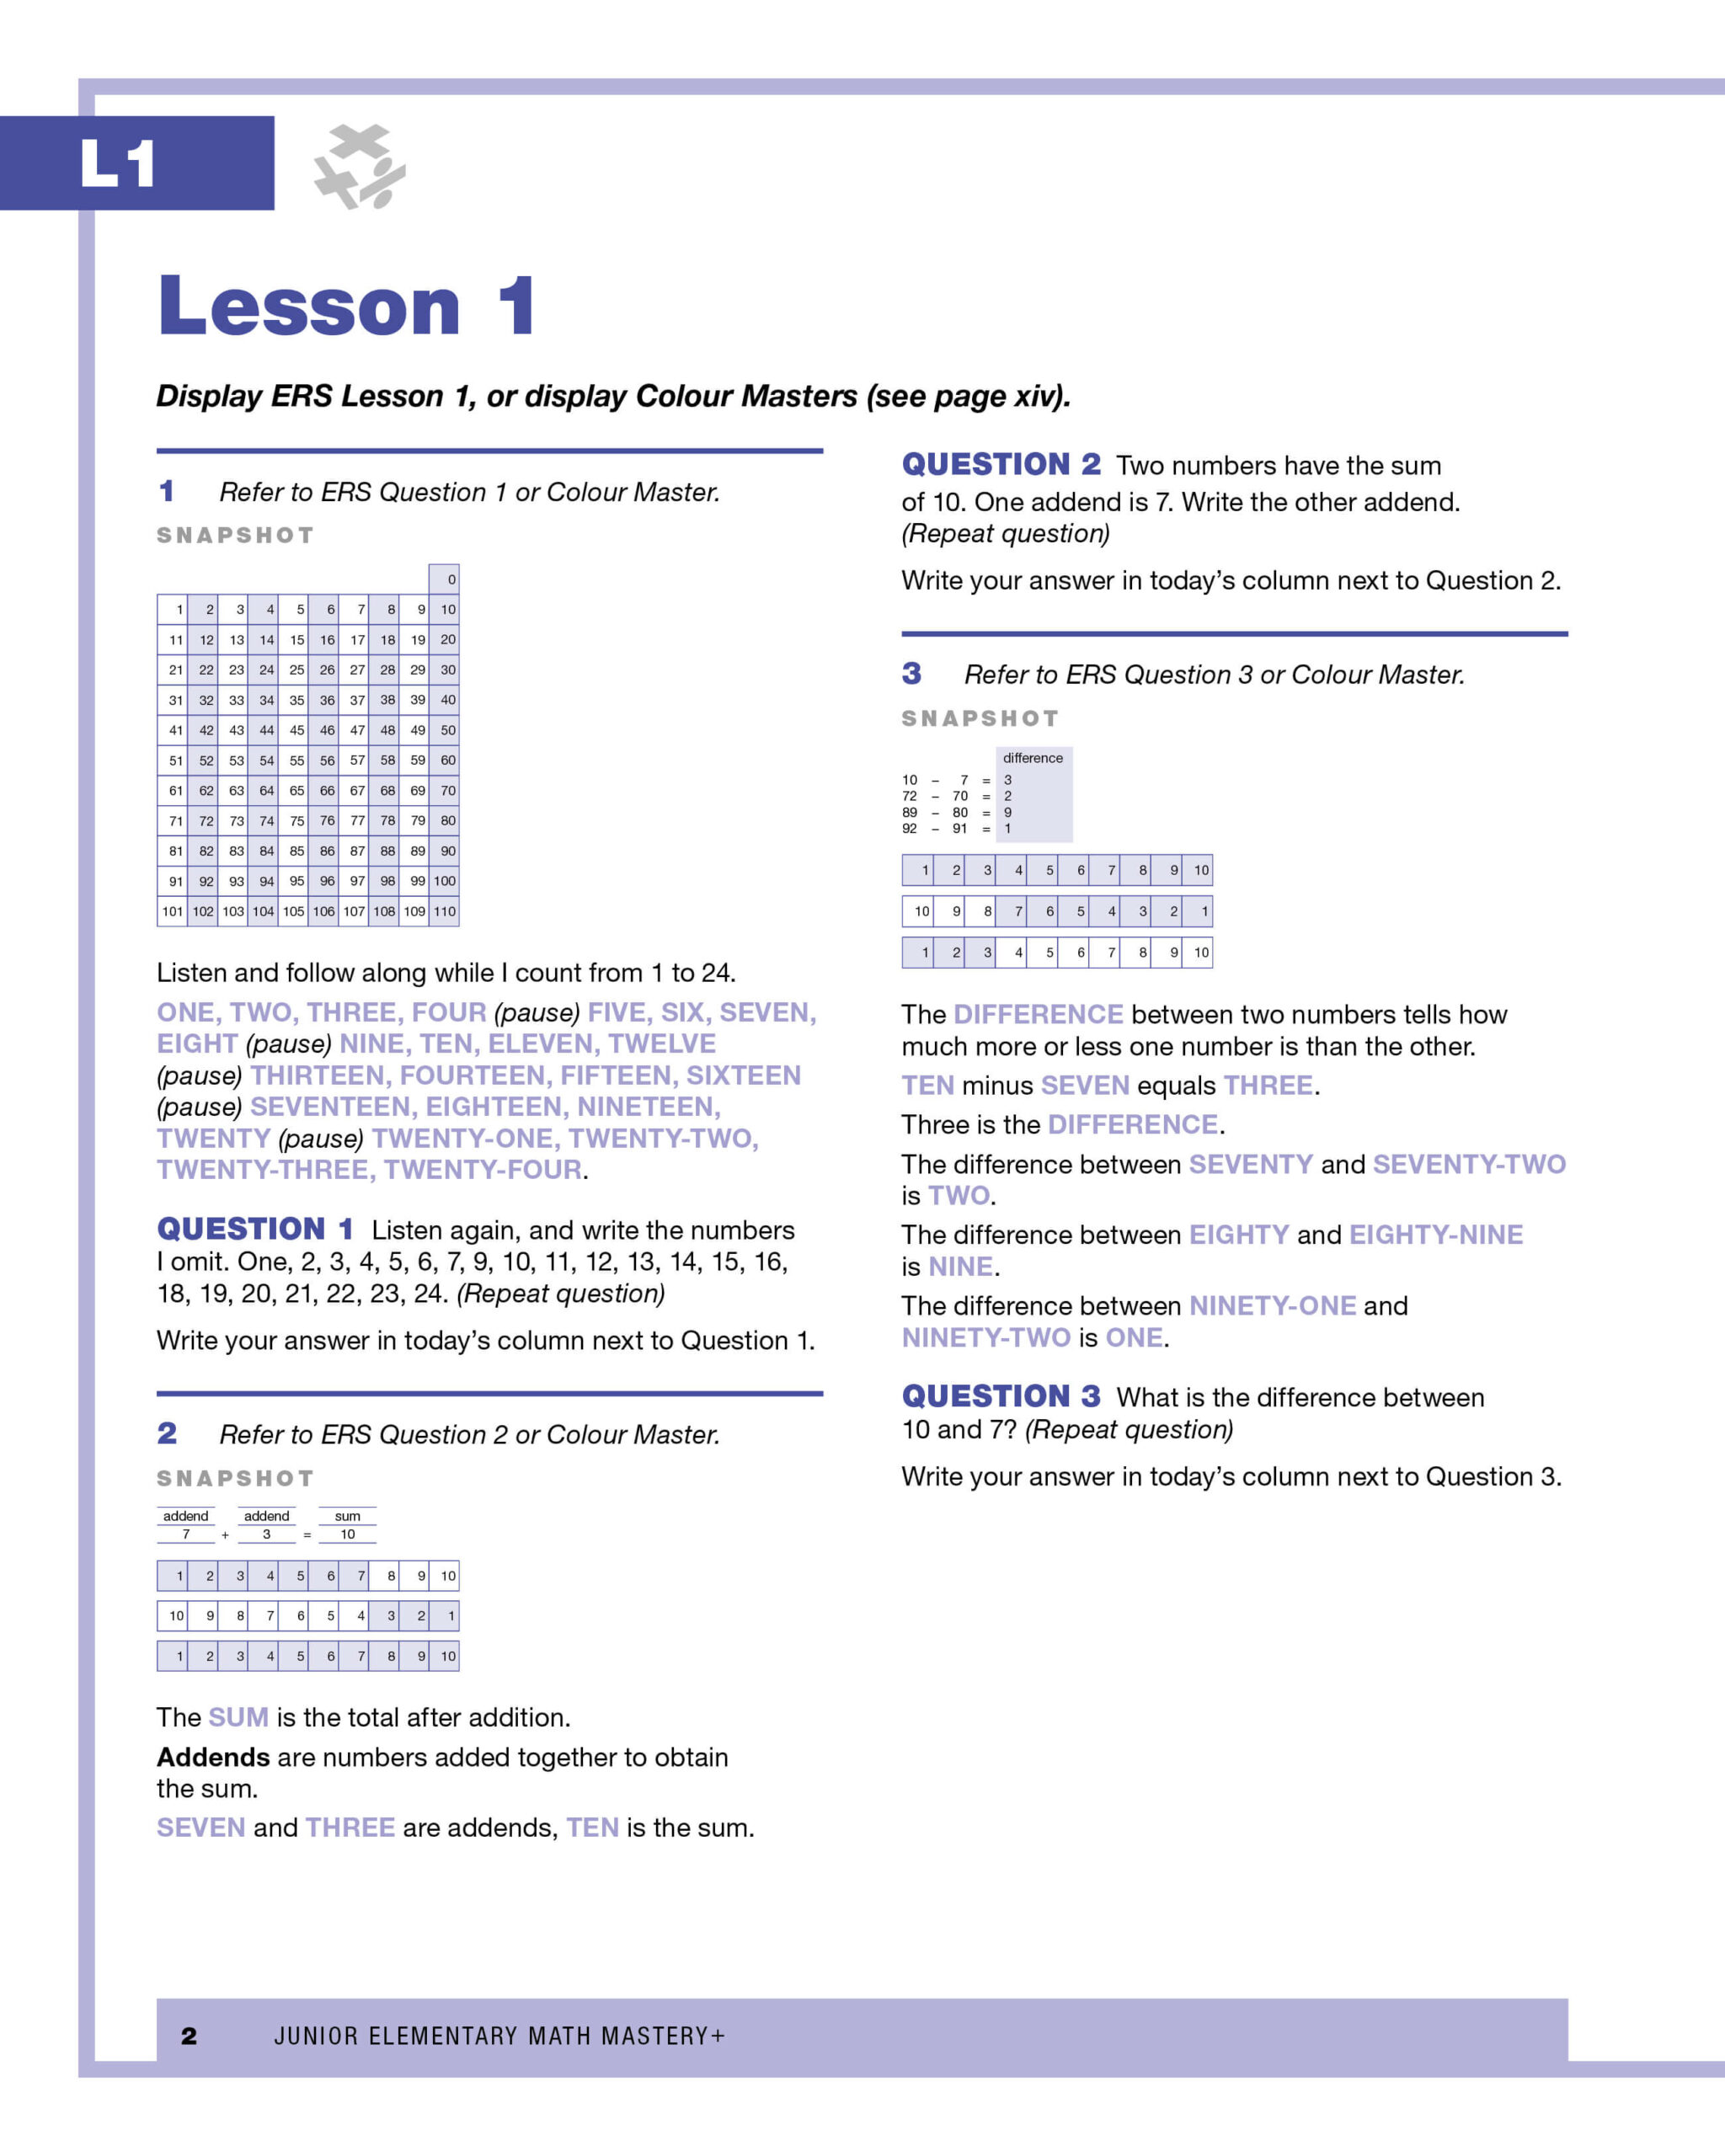 JEMM+ Lessons 1-5